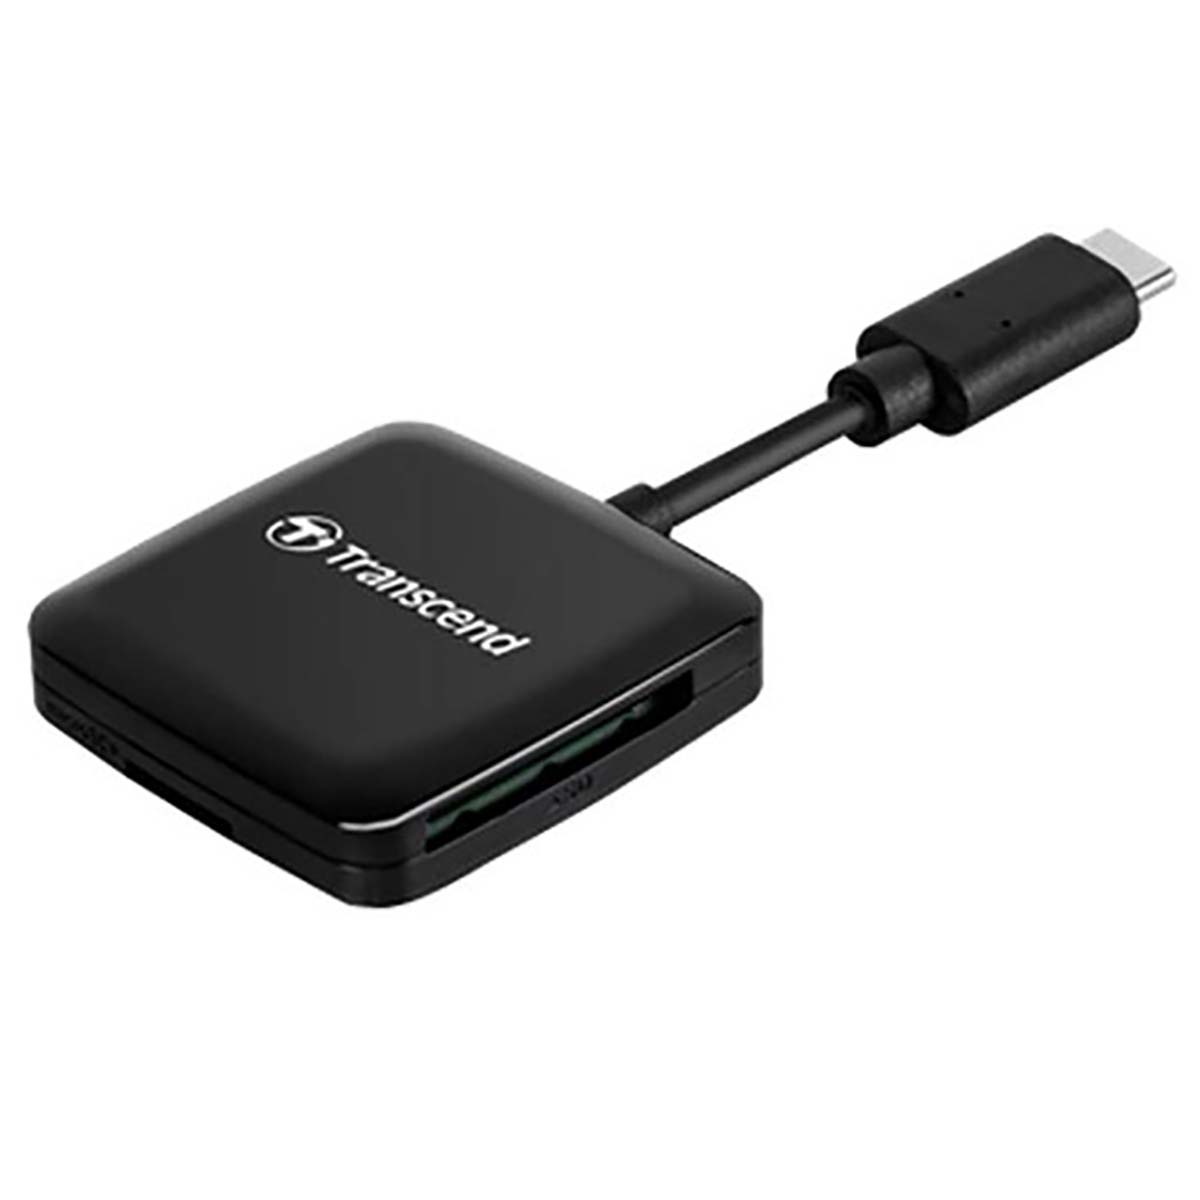 Transcend SD/microSD Card Reader Type C USB 3.2 